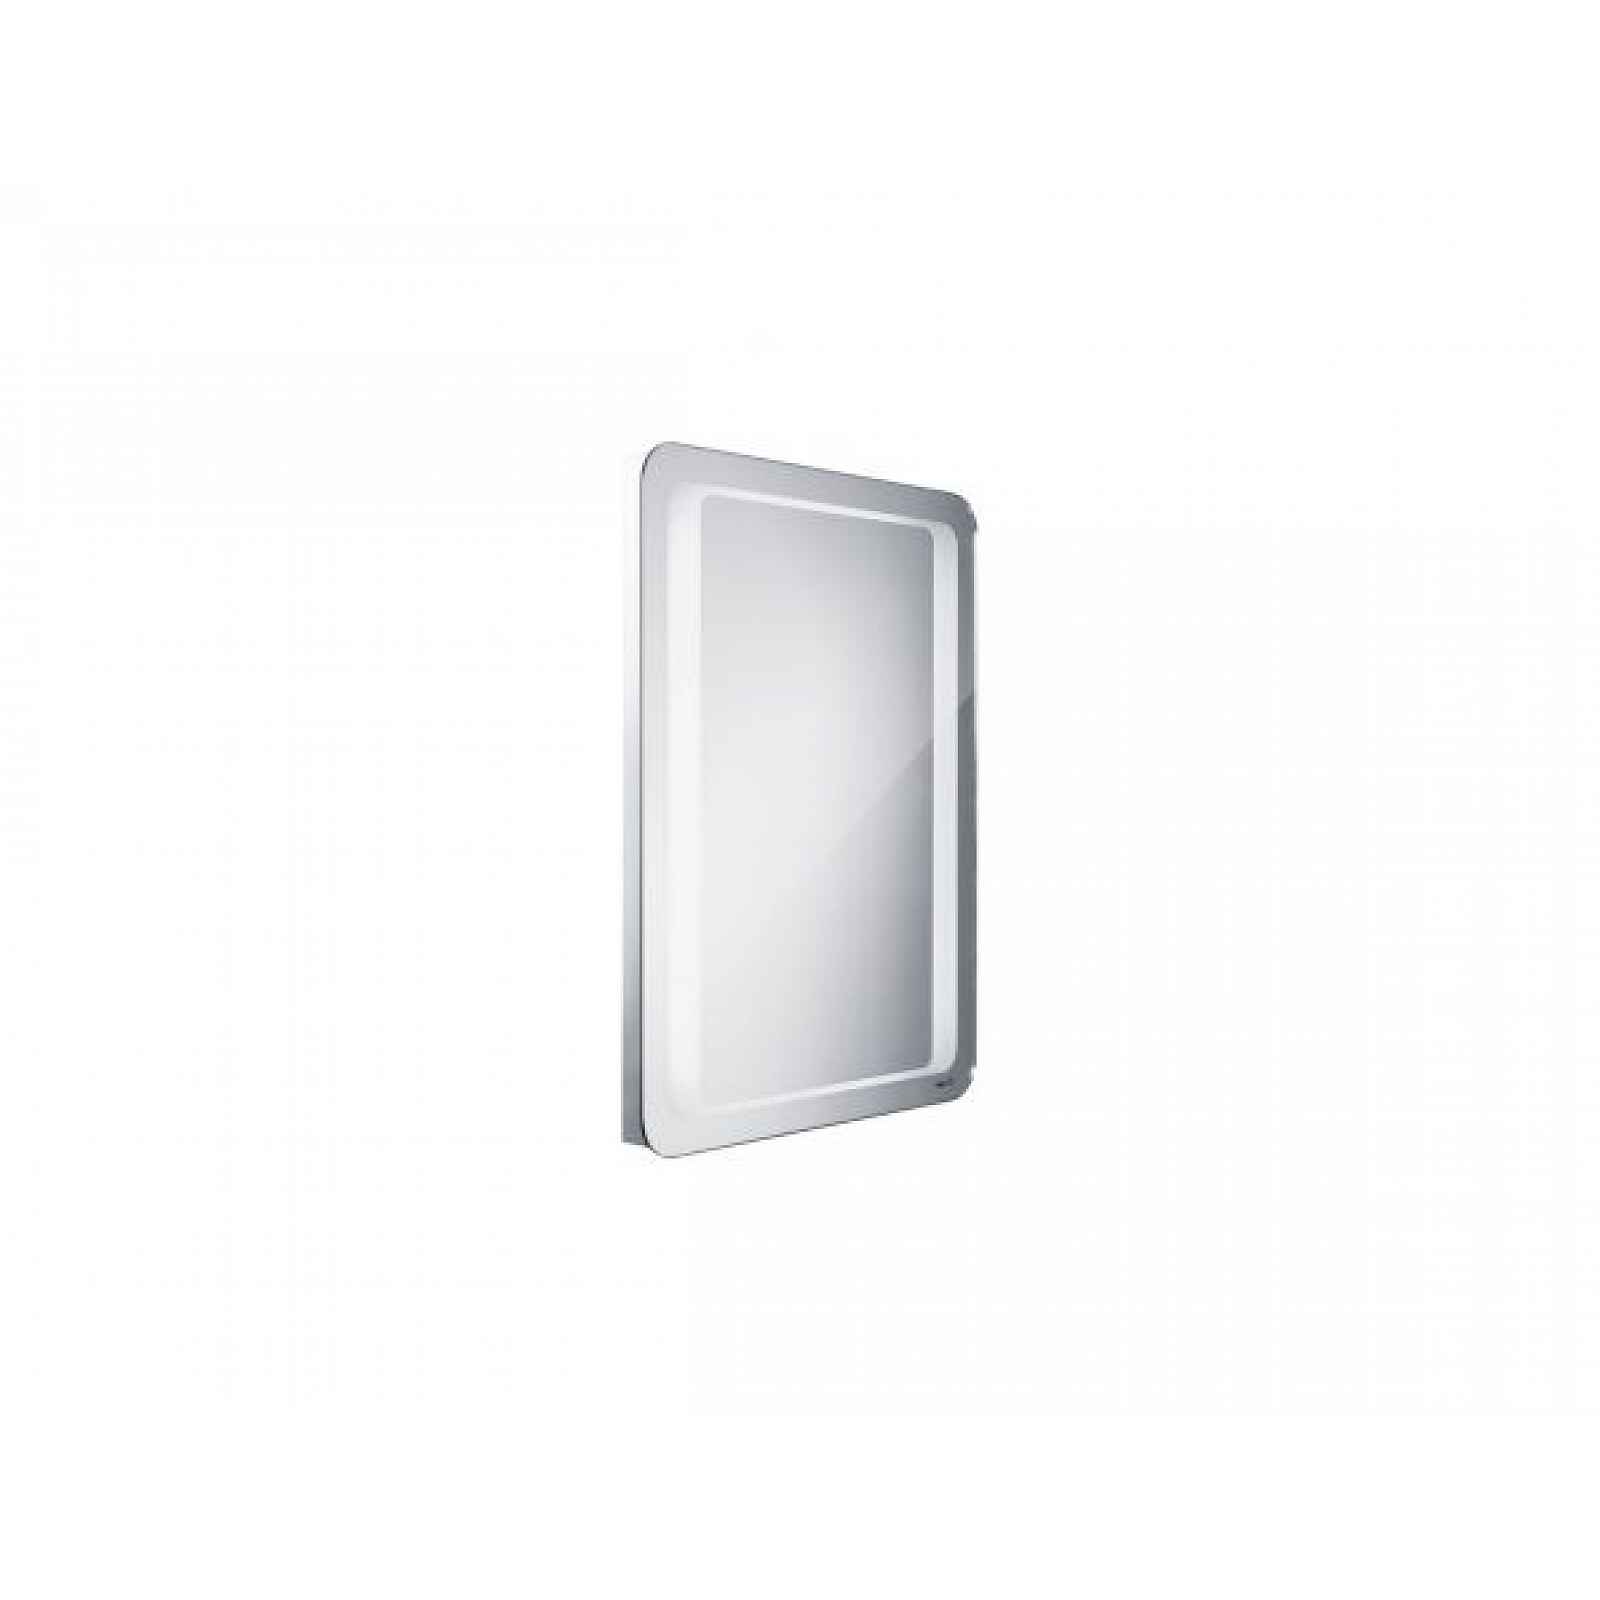 Zrcadlo bez vypínače Nimco 60x80 cm hliník ZP 5001